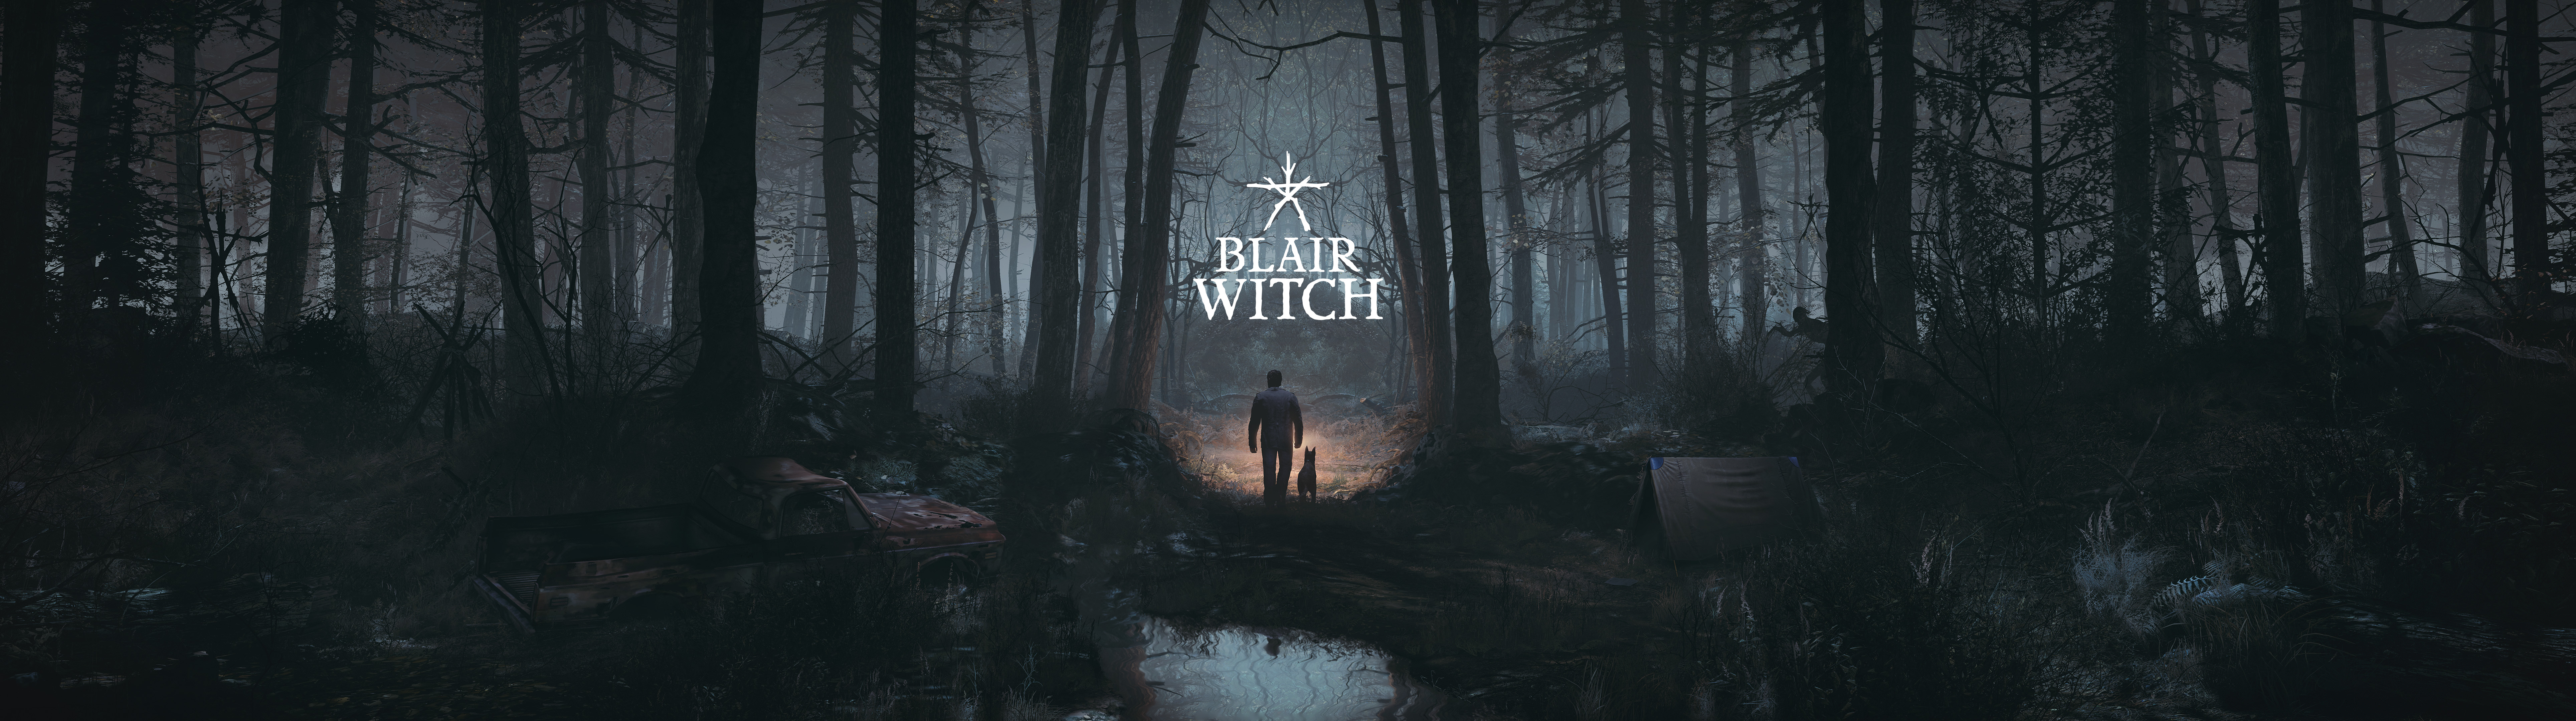 Blair Witch теперь доступна на ПК, XB1 и Xbox Game Pass - трейлер запуска и первые 11 минут игрового процесса